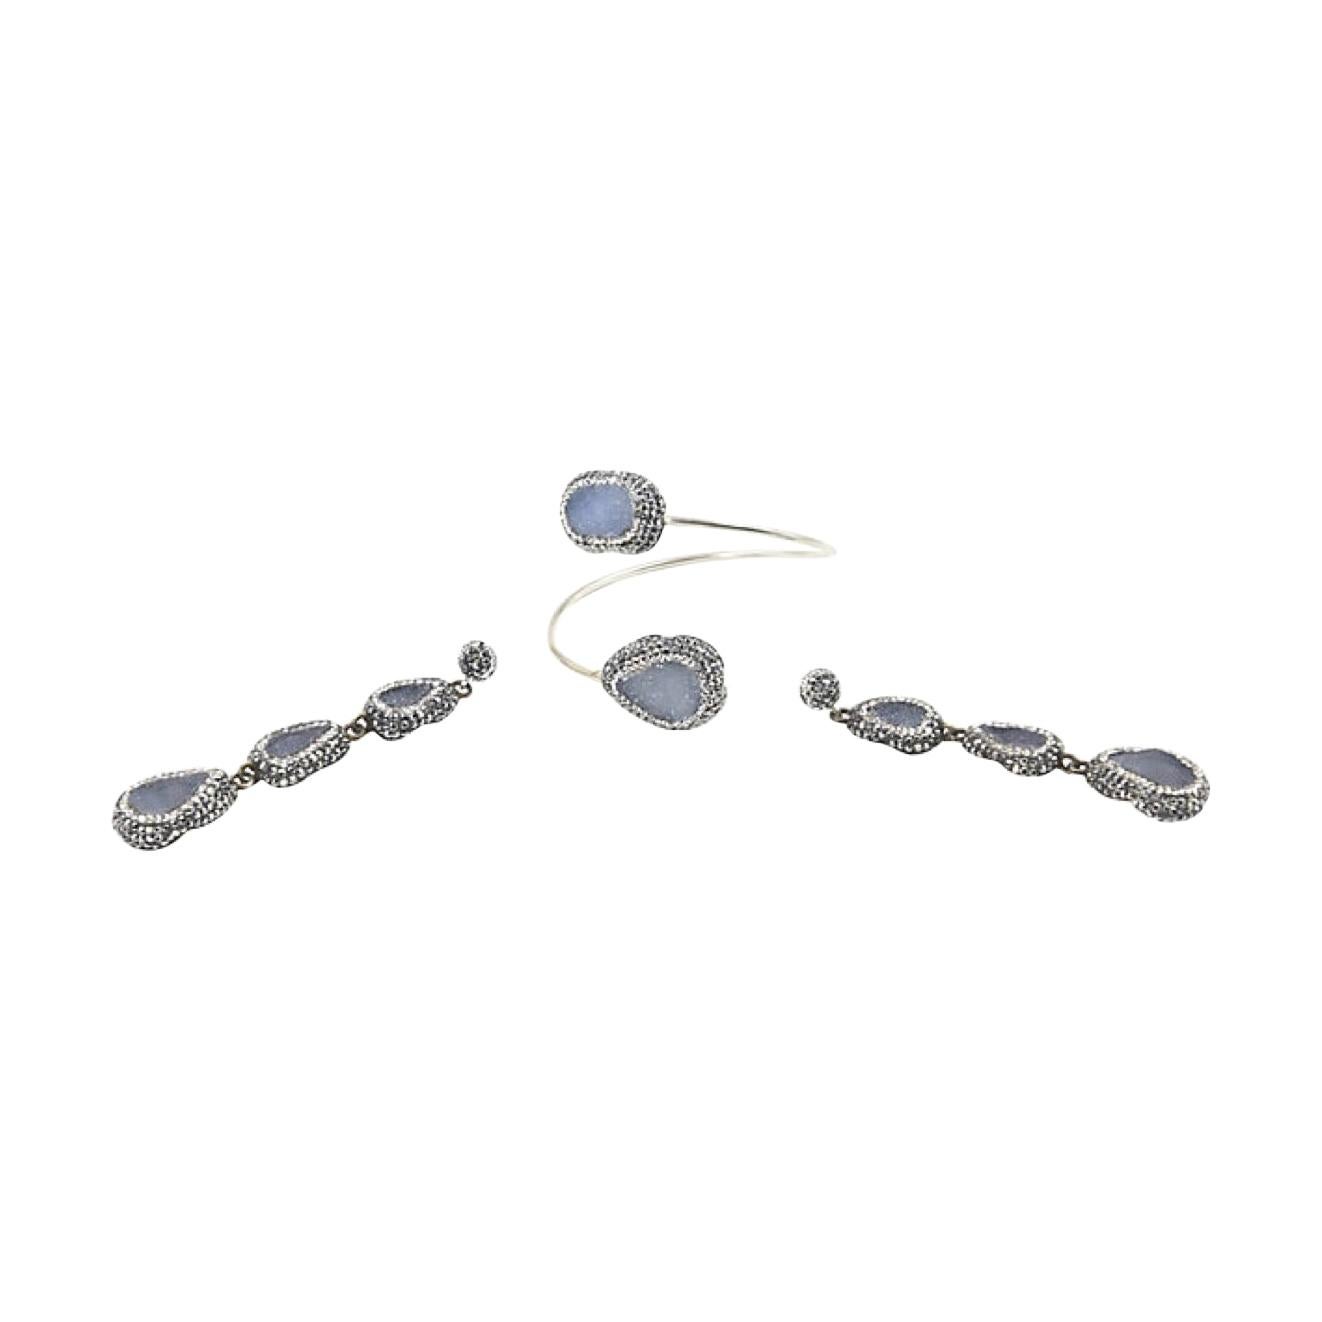 Blue Gray Druzy Crystal Silver Bracelet and Earrings